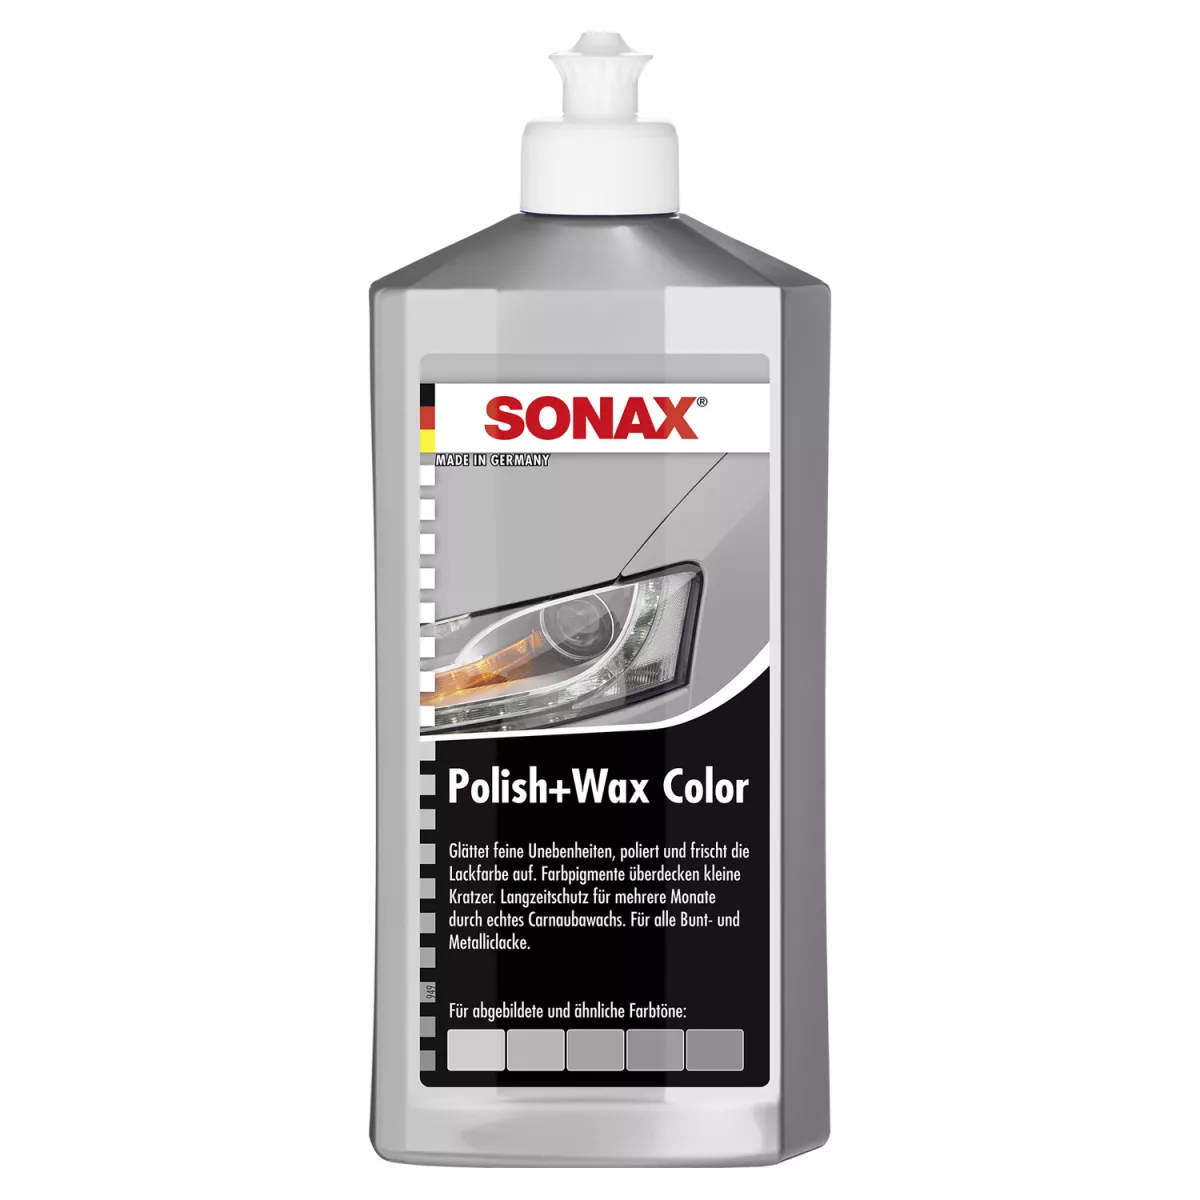 SONAX Polish+Wax Color Farbpolitur 500 Milliliter silber/grau